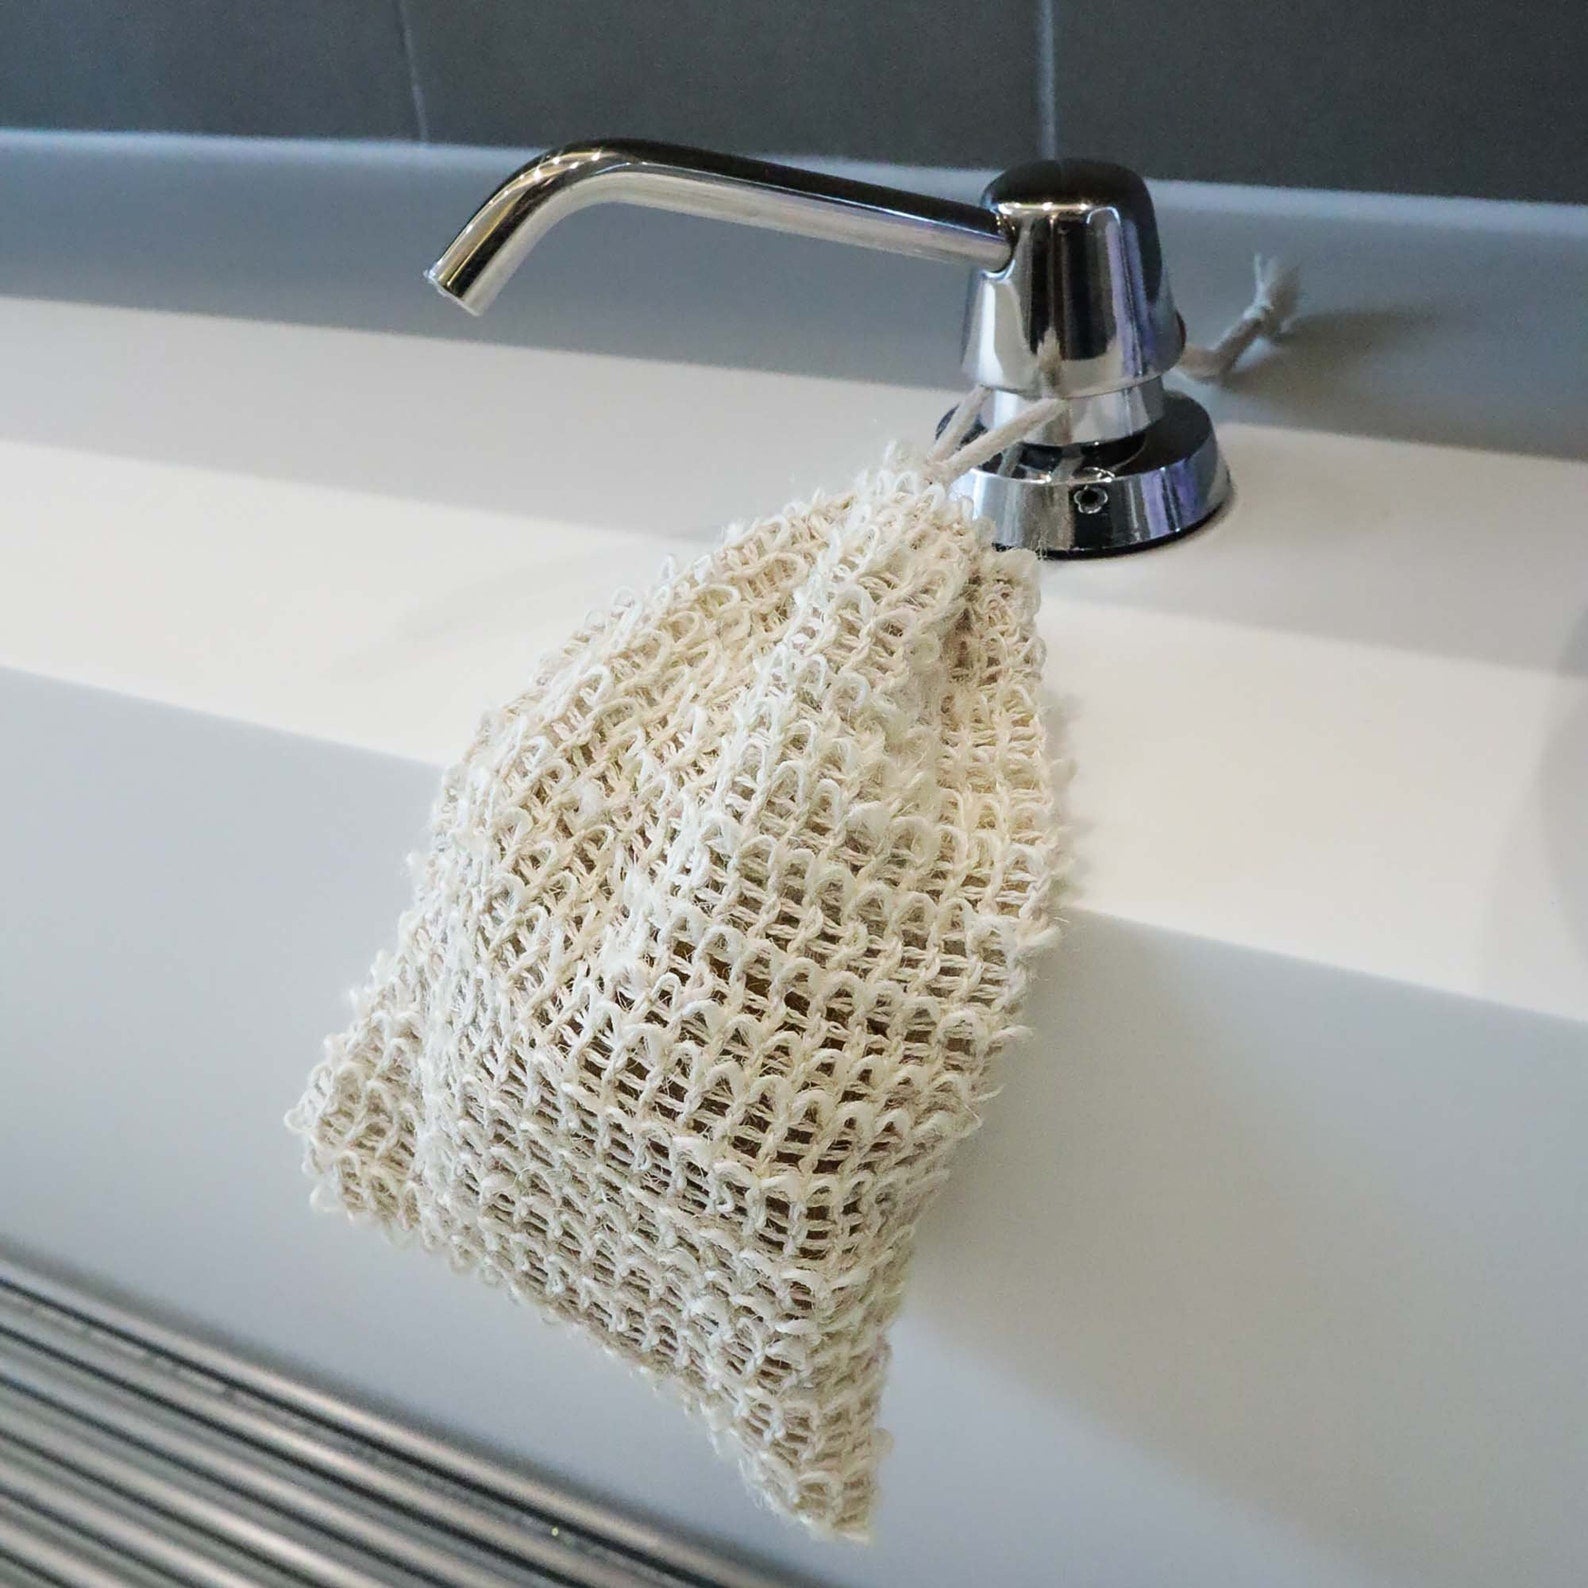 Exfoliating soap saver bag made of sisal with drawstring shown hanging at sink